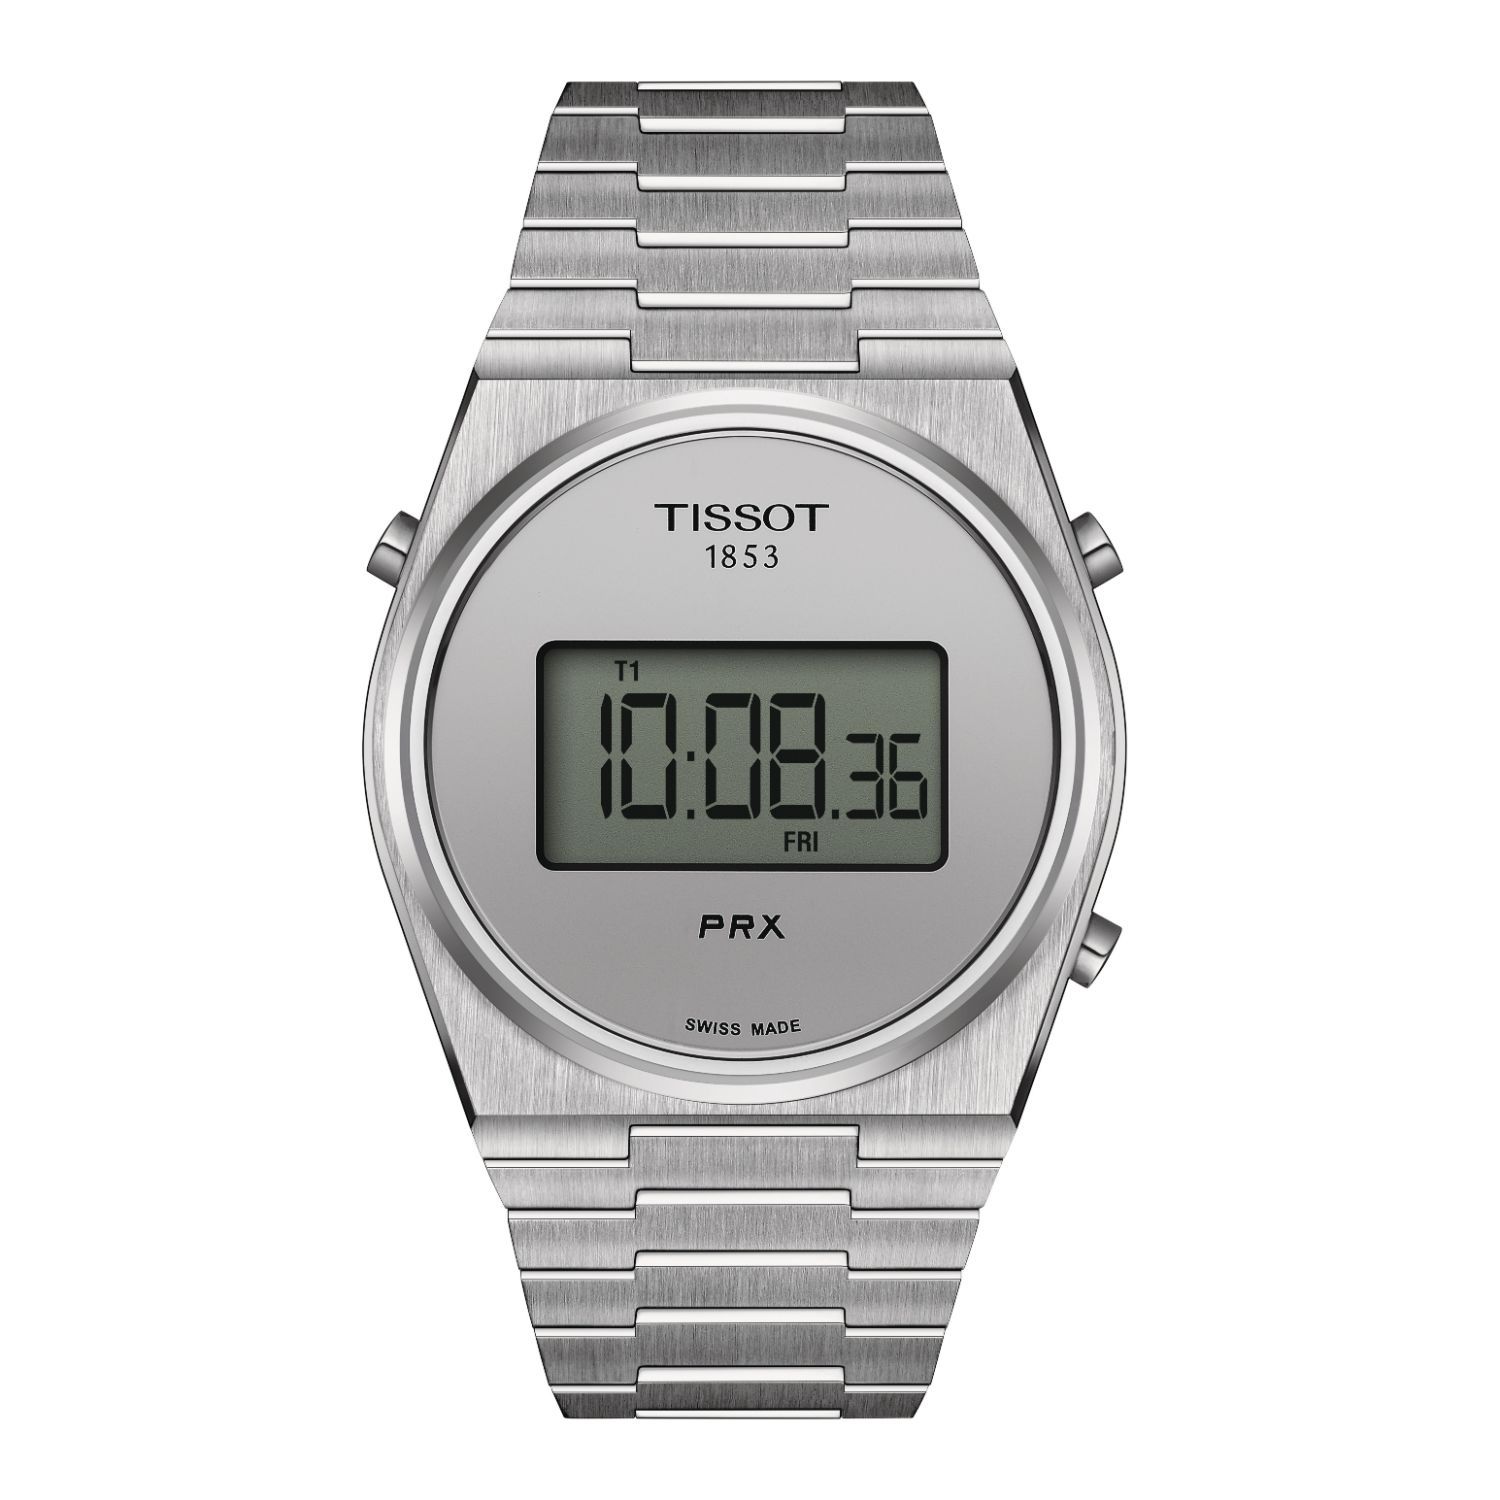 Photos - Wrist Watch TISSOT PRX Digital 40mm Silver Dial Steel Case Bracelet Watch 